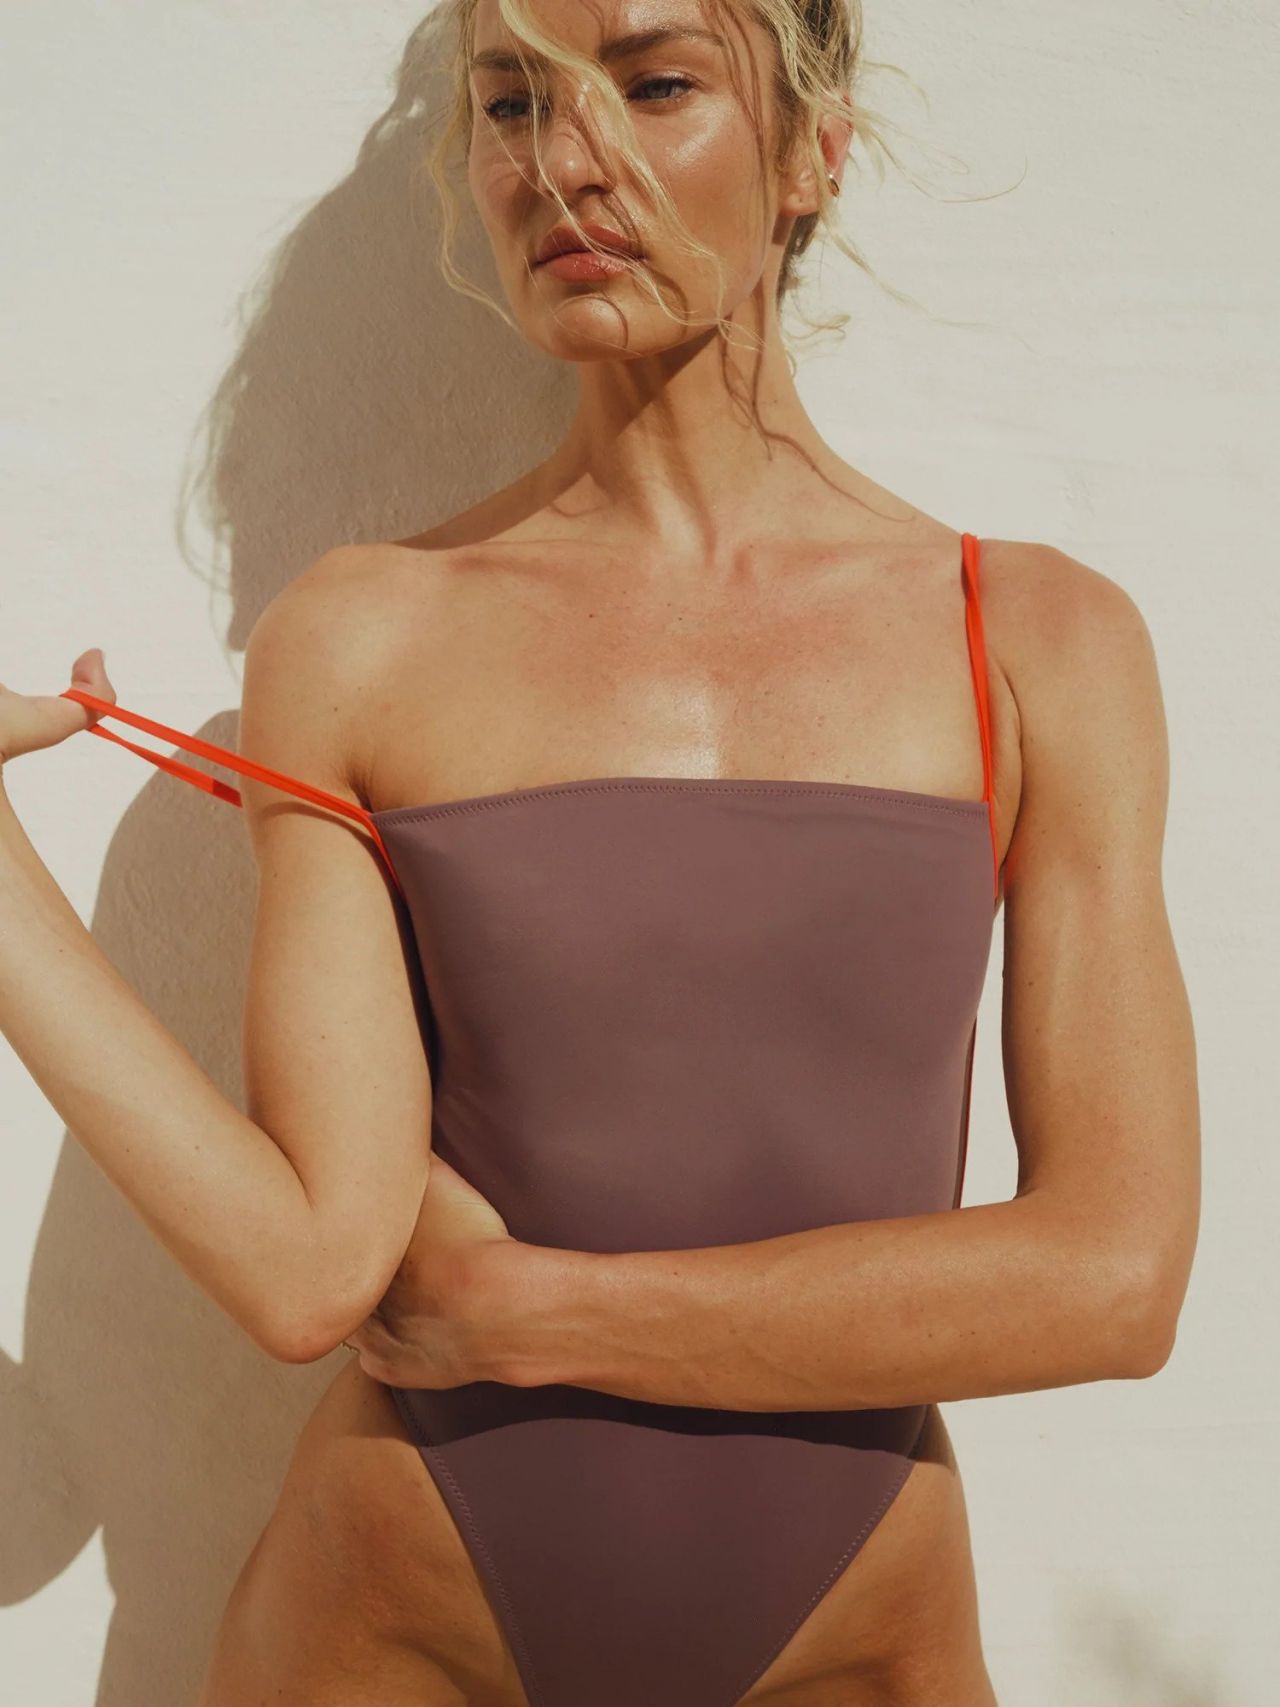 Candice Swanepoel is Always Bikini Ready! - Photo 1